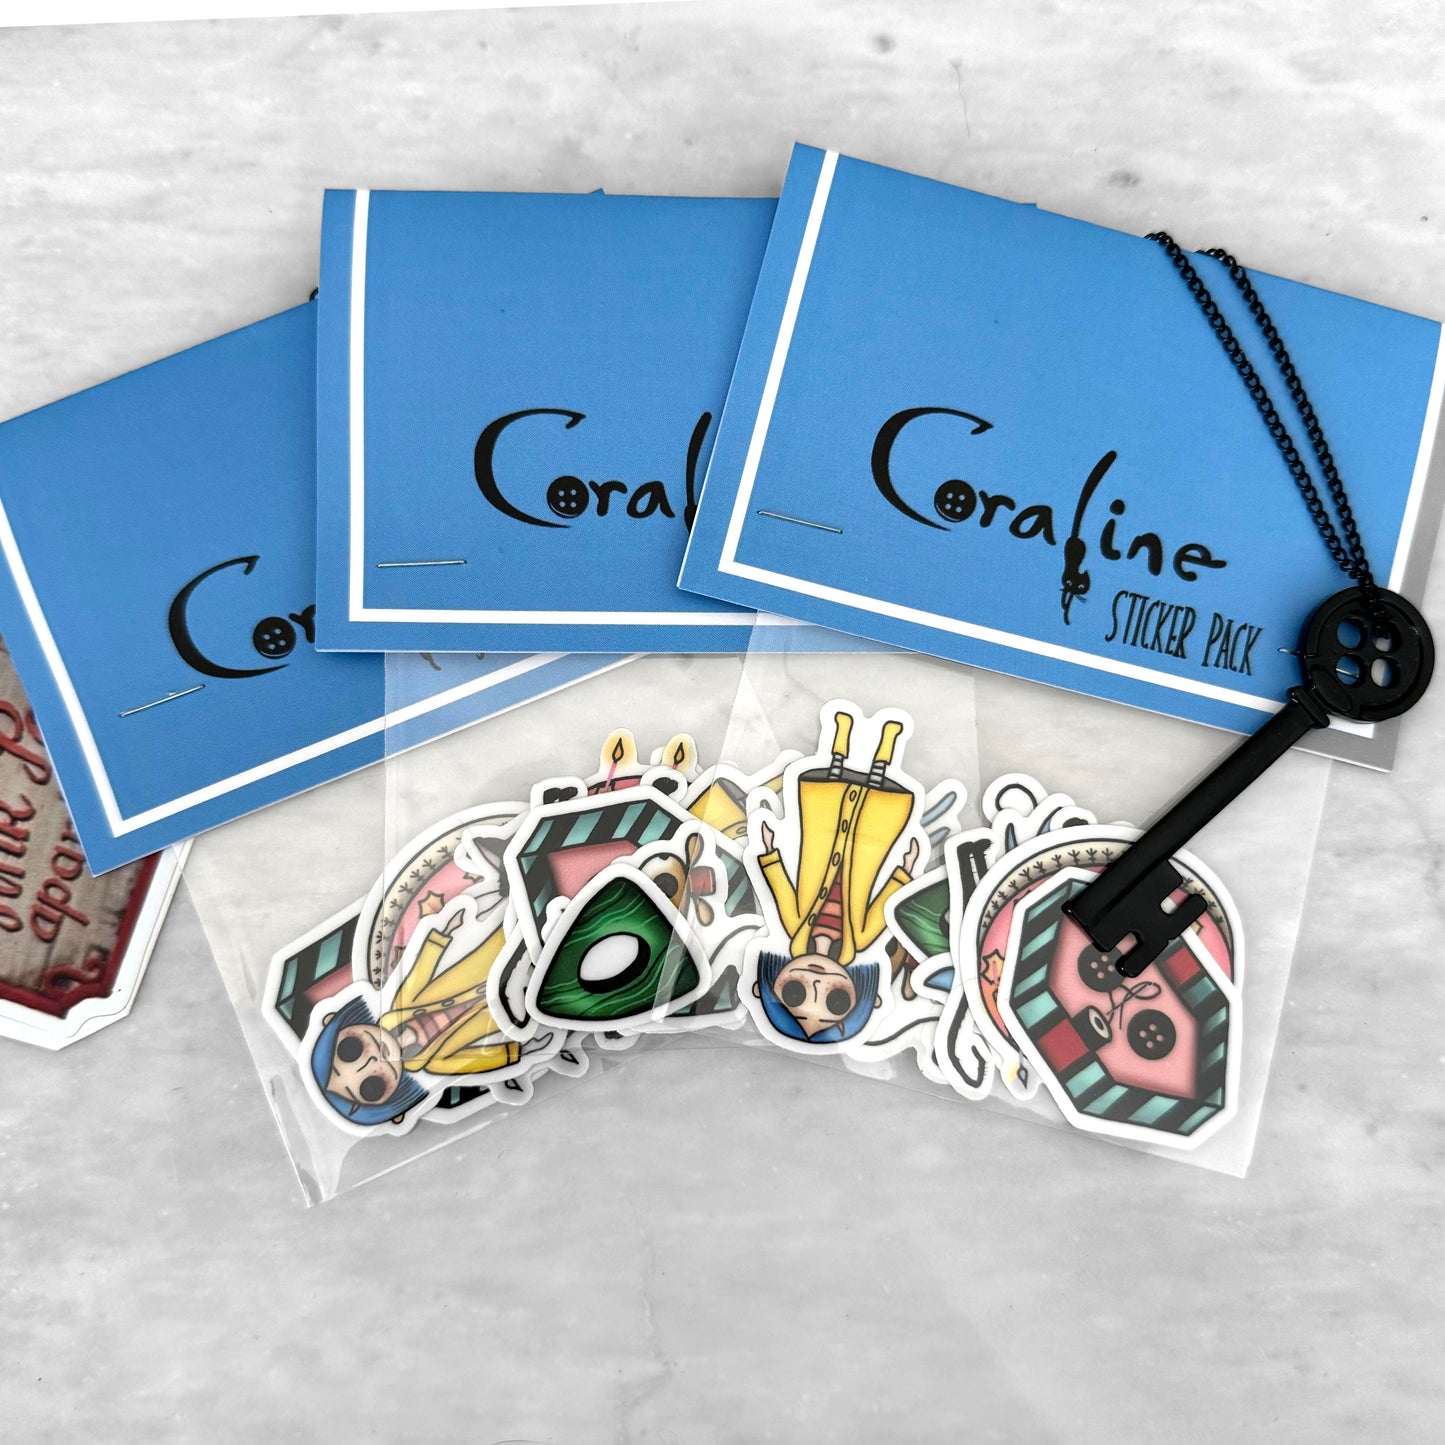 NEW! Coraline Sticker Pack